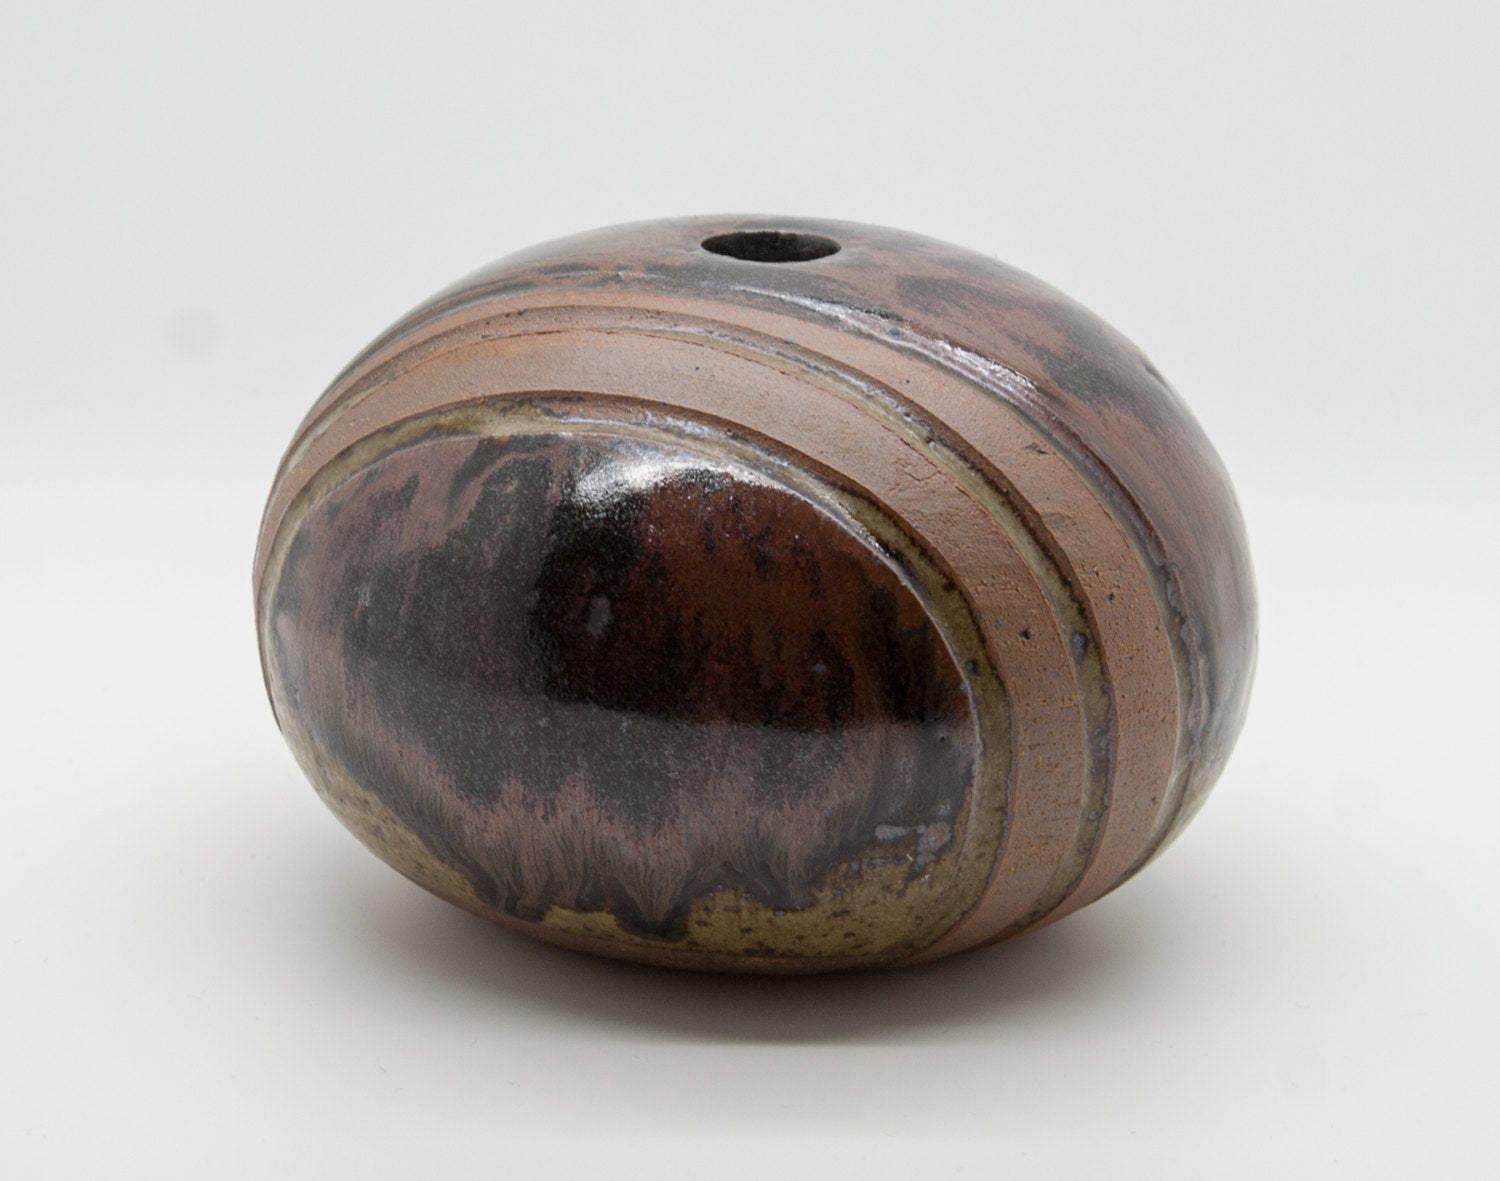 WÜRTZ Ceramics Brown Glazed Stoneware Vase Mollaris.com 